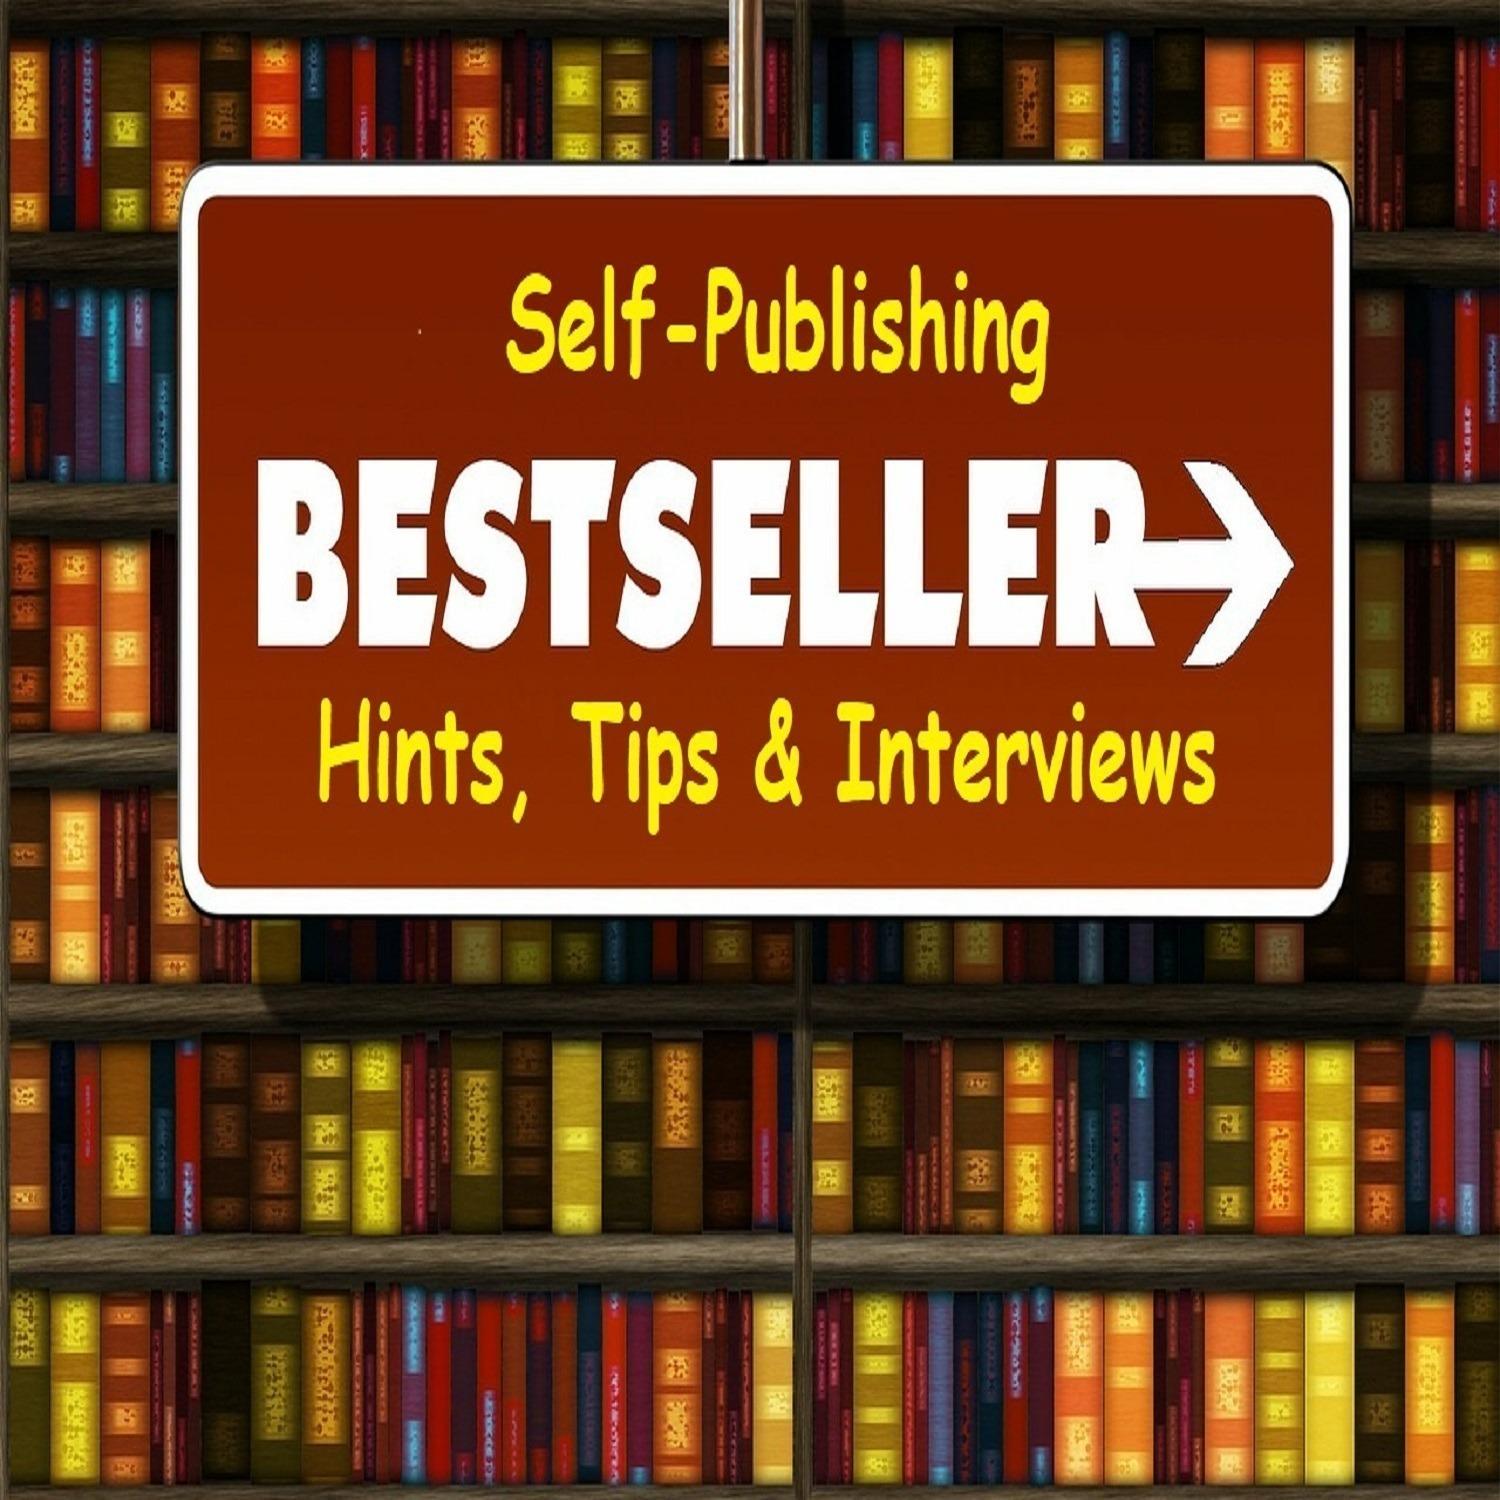 Self-Publishing Best Seller, Hints, Tips & Interviews